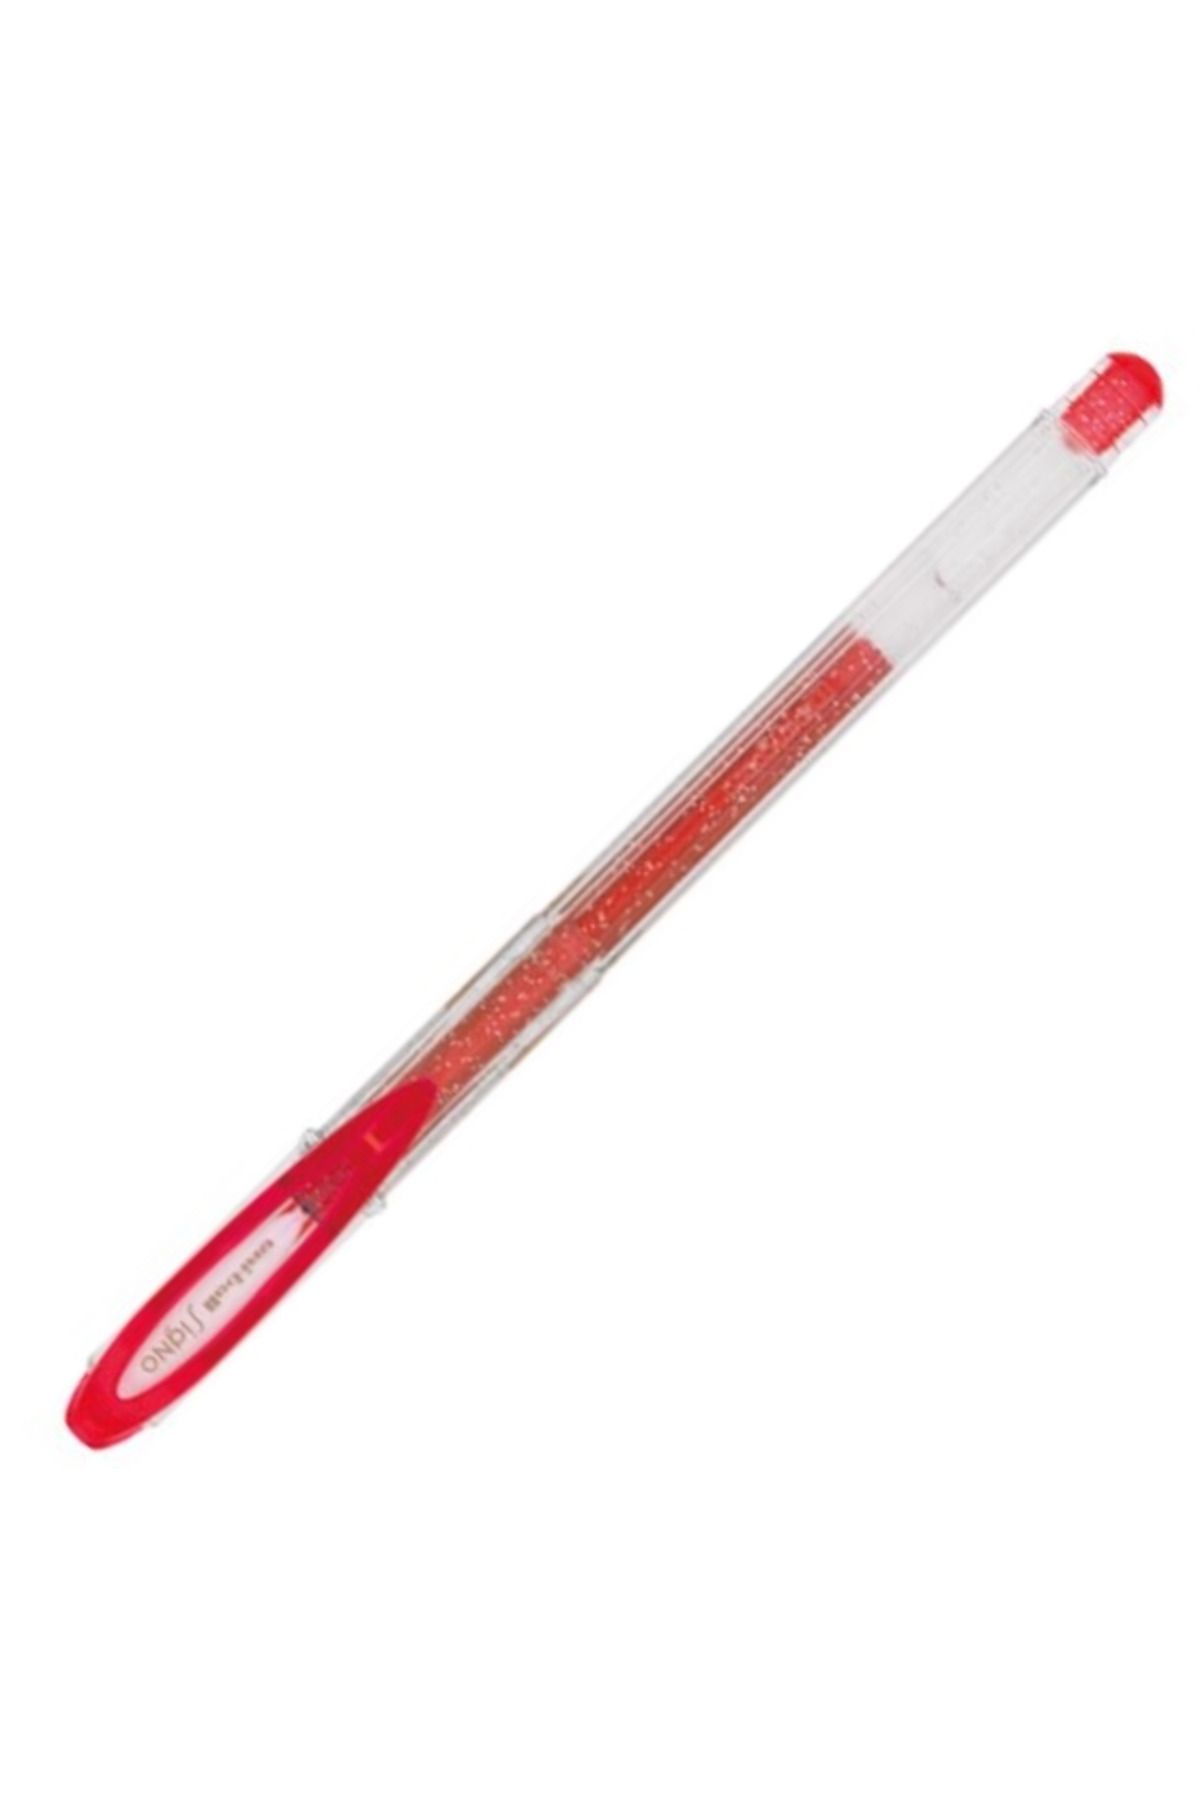 Uni Jel Kalem Sıgno Sparklıng Um-120sp 1.0 Kırmızı[sub_name]